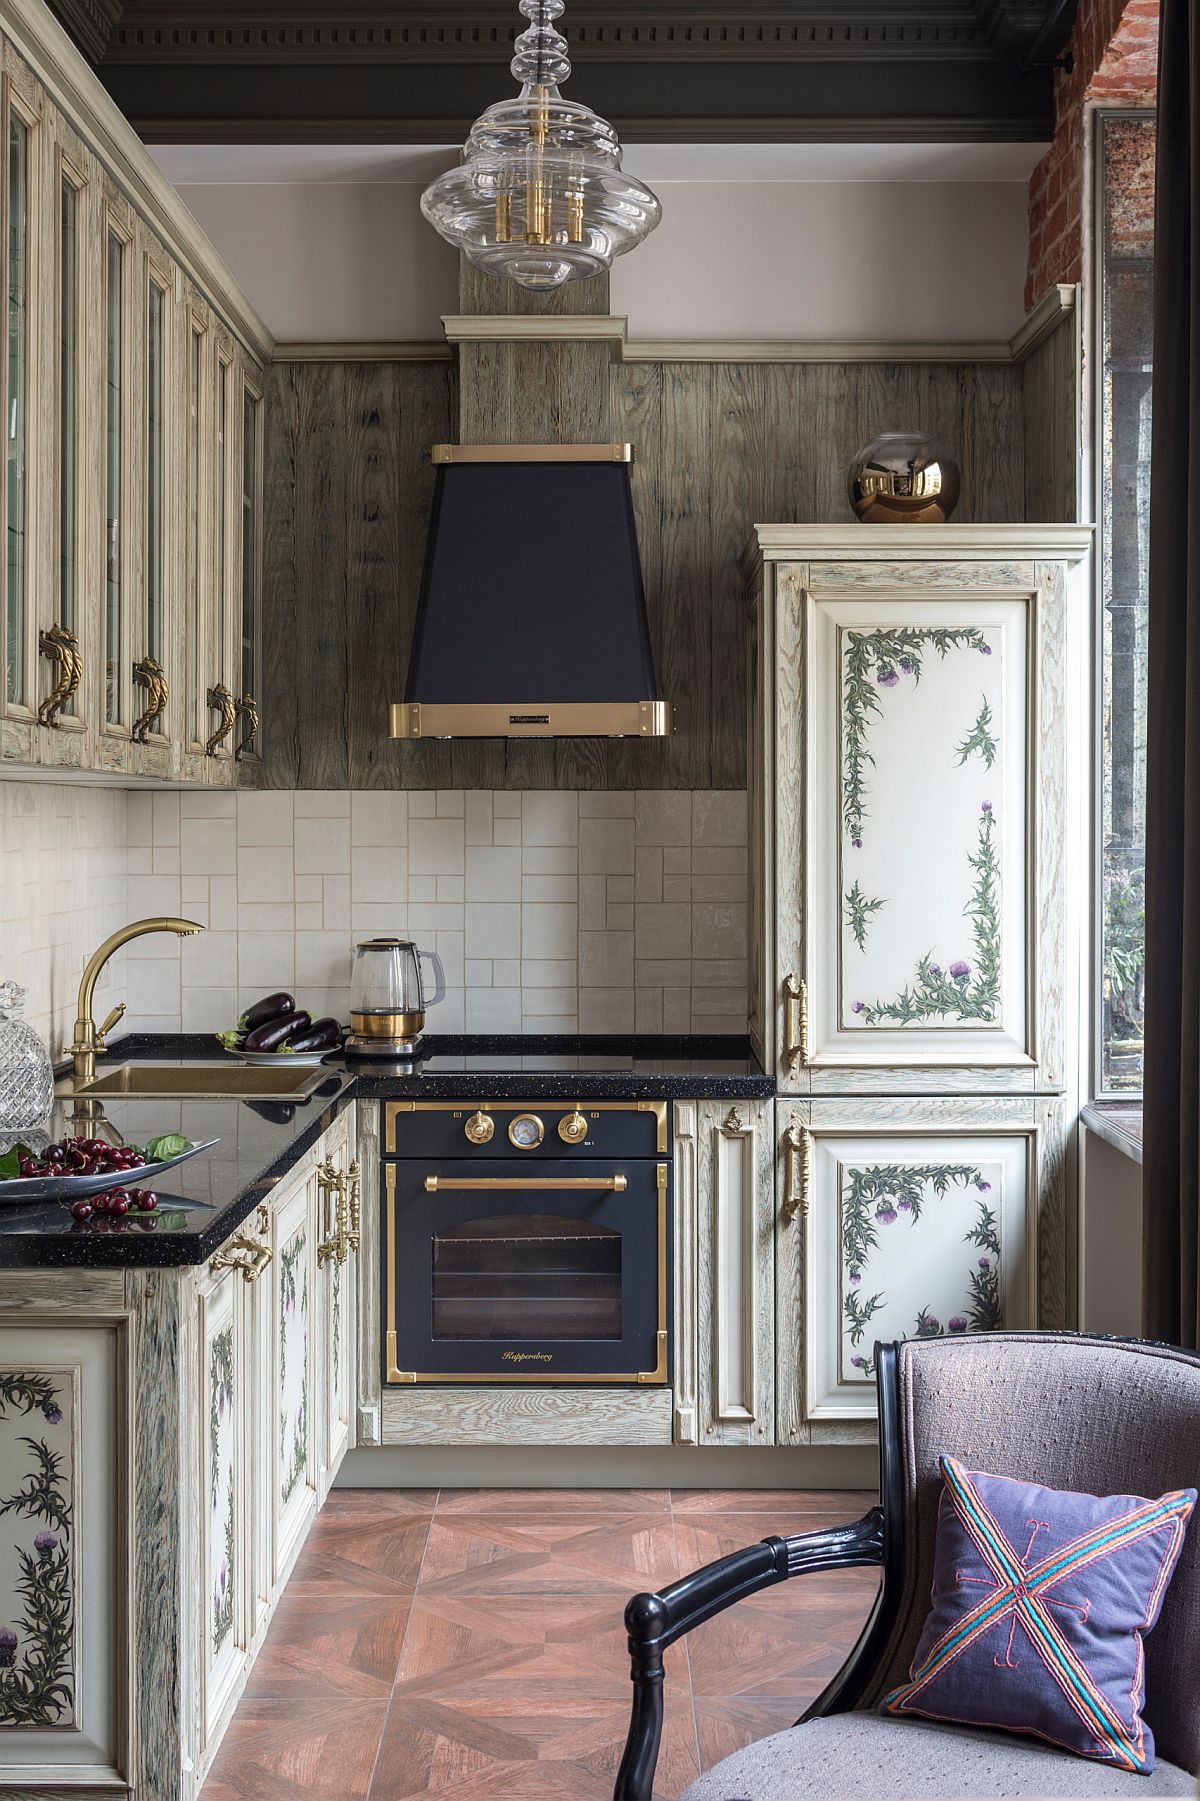  victorian style kitchen cabinets